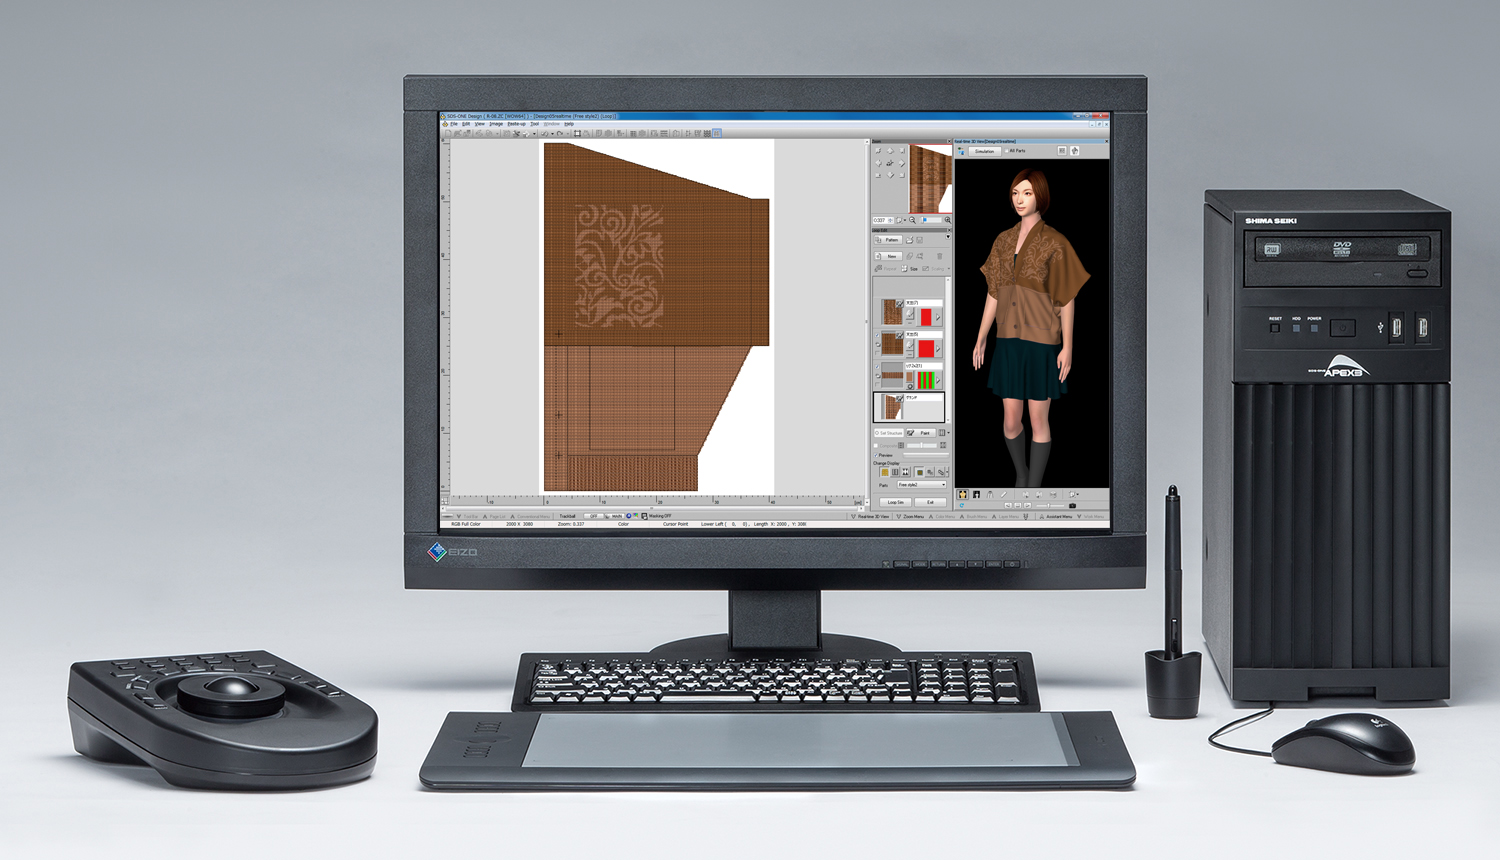 SDS-ONE APEX3 3D design system is key to Shima Seiki’s ‘Total Fashion System’ concept. © Shima Seiki 